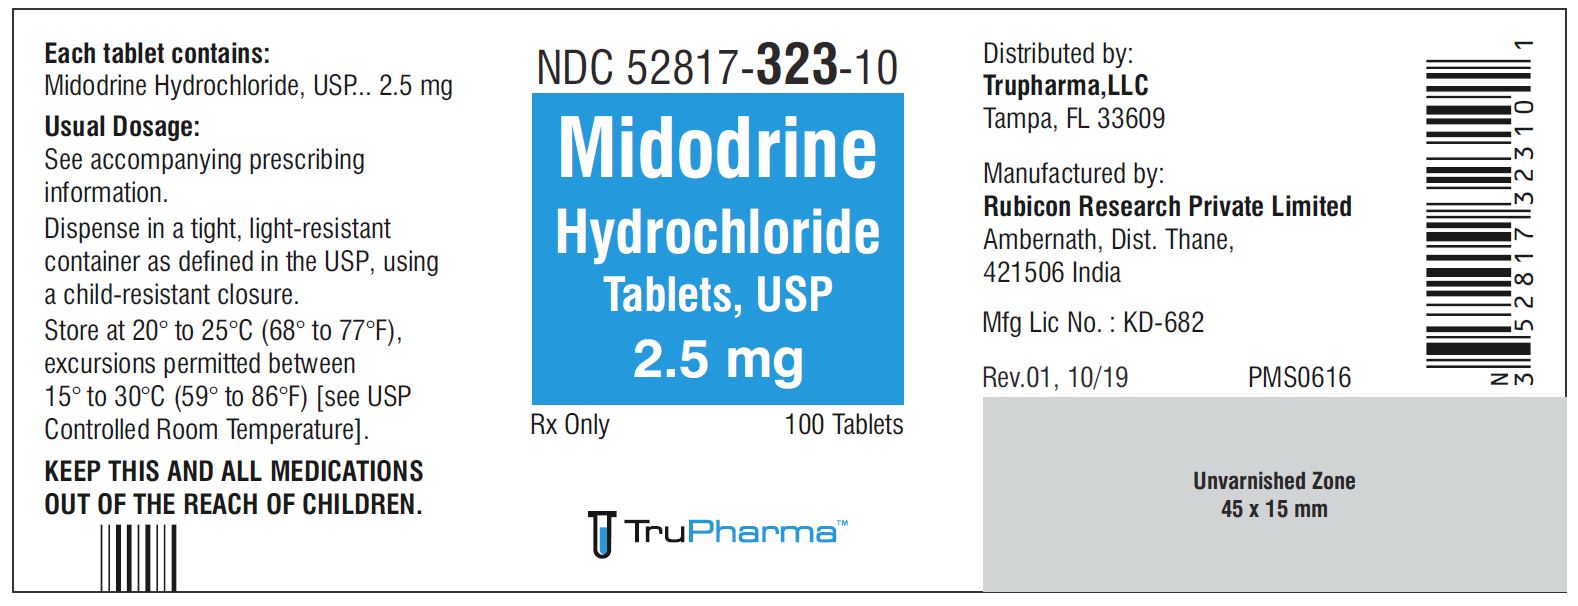 Midodrine Hydrochloride Tablets, USP 2.5mg - 100 Tablets - NDC 52817-323-10